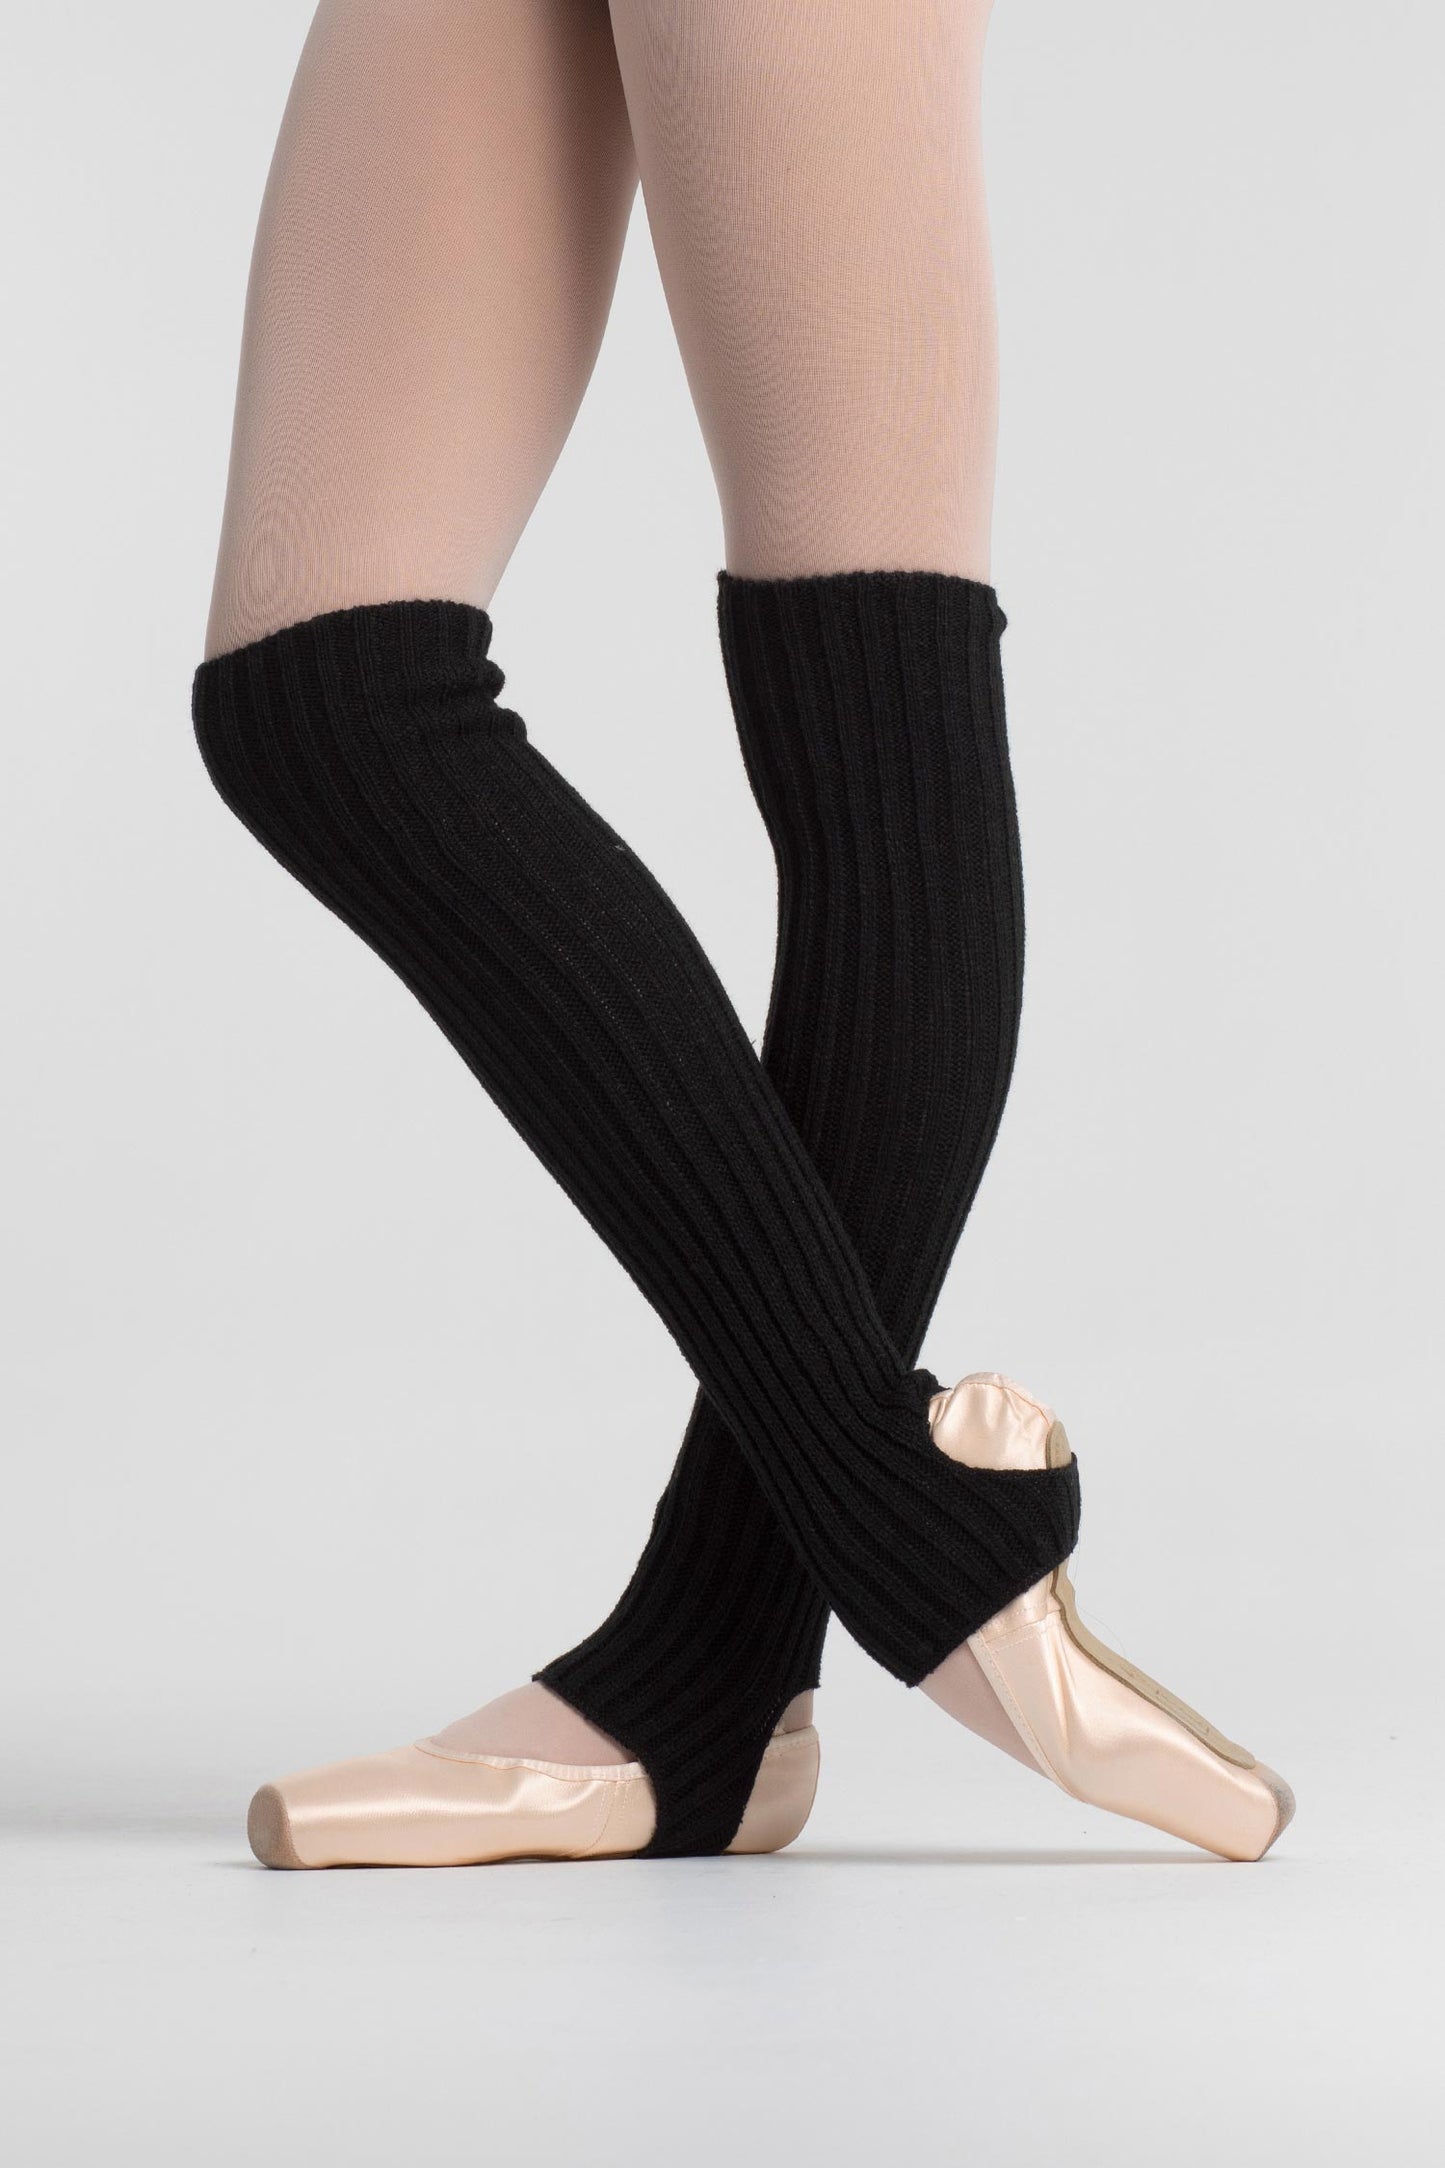 Intermezzo Medcan legwarmers in Black from The Collective Dancewear